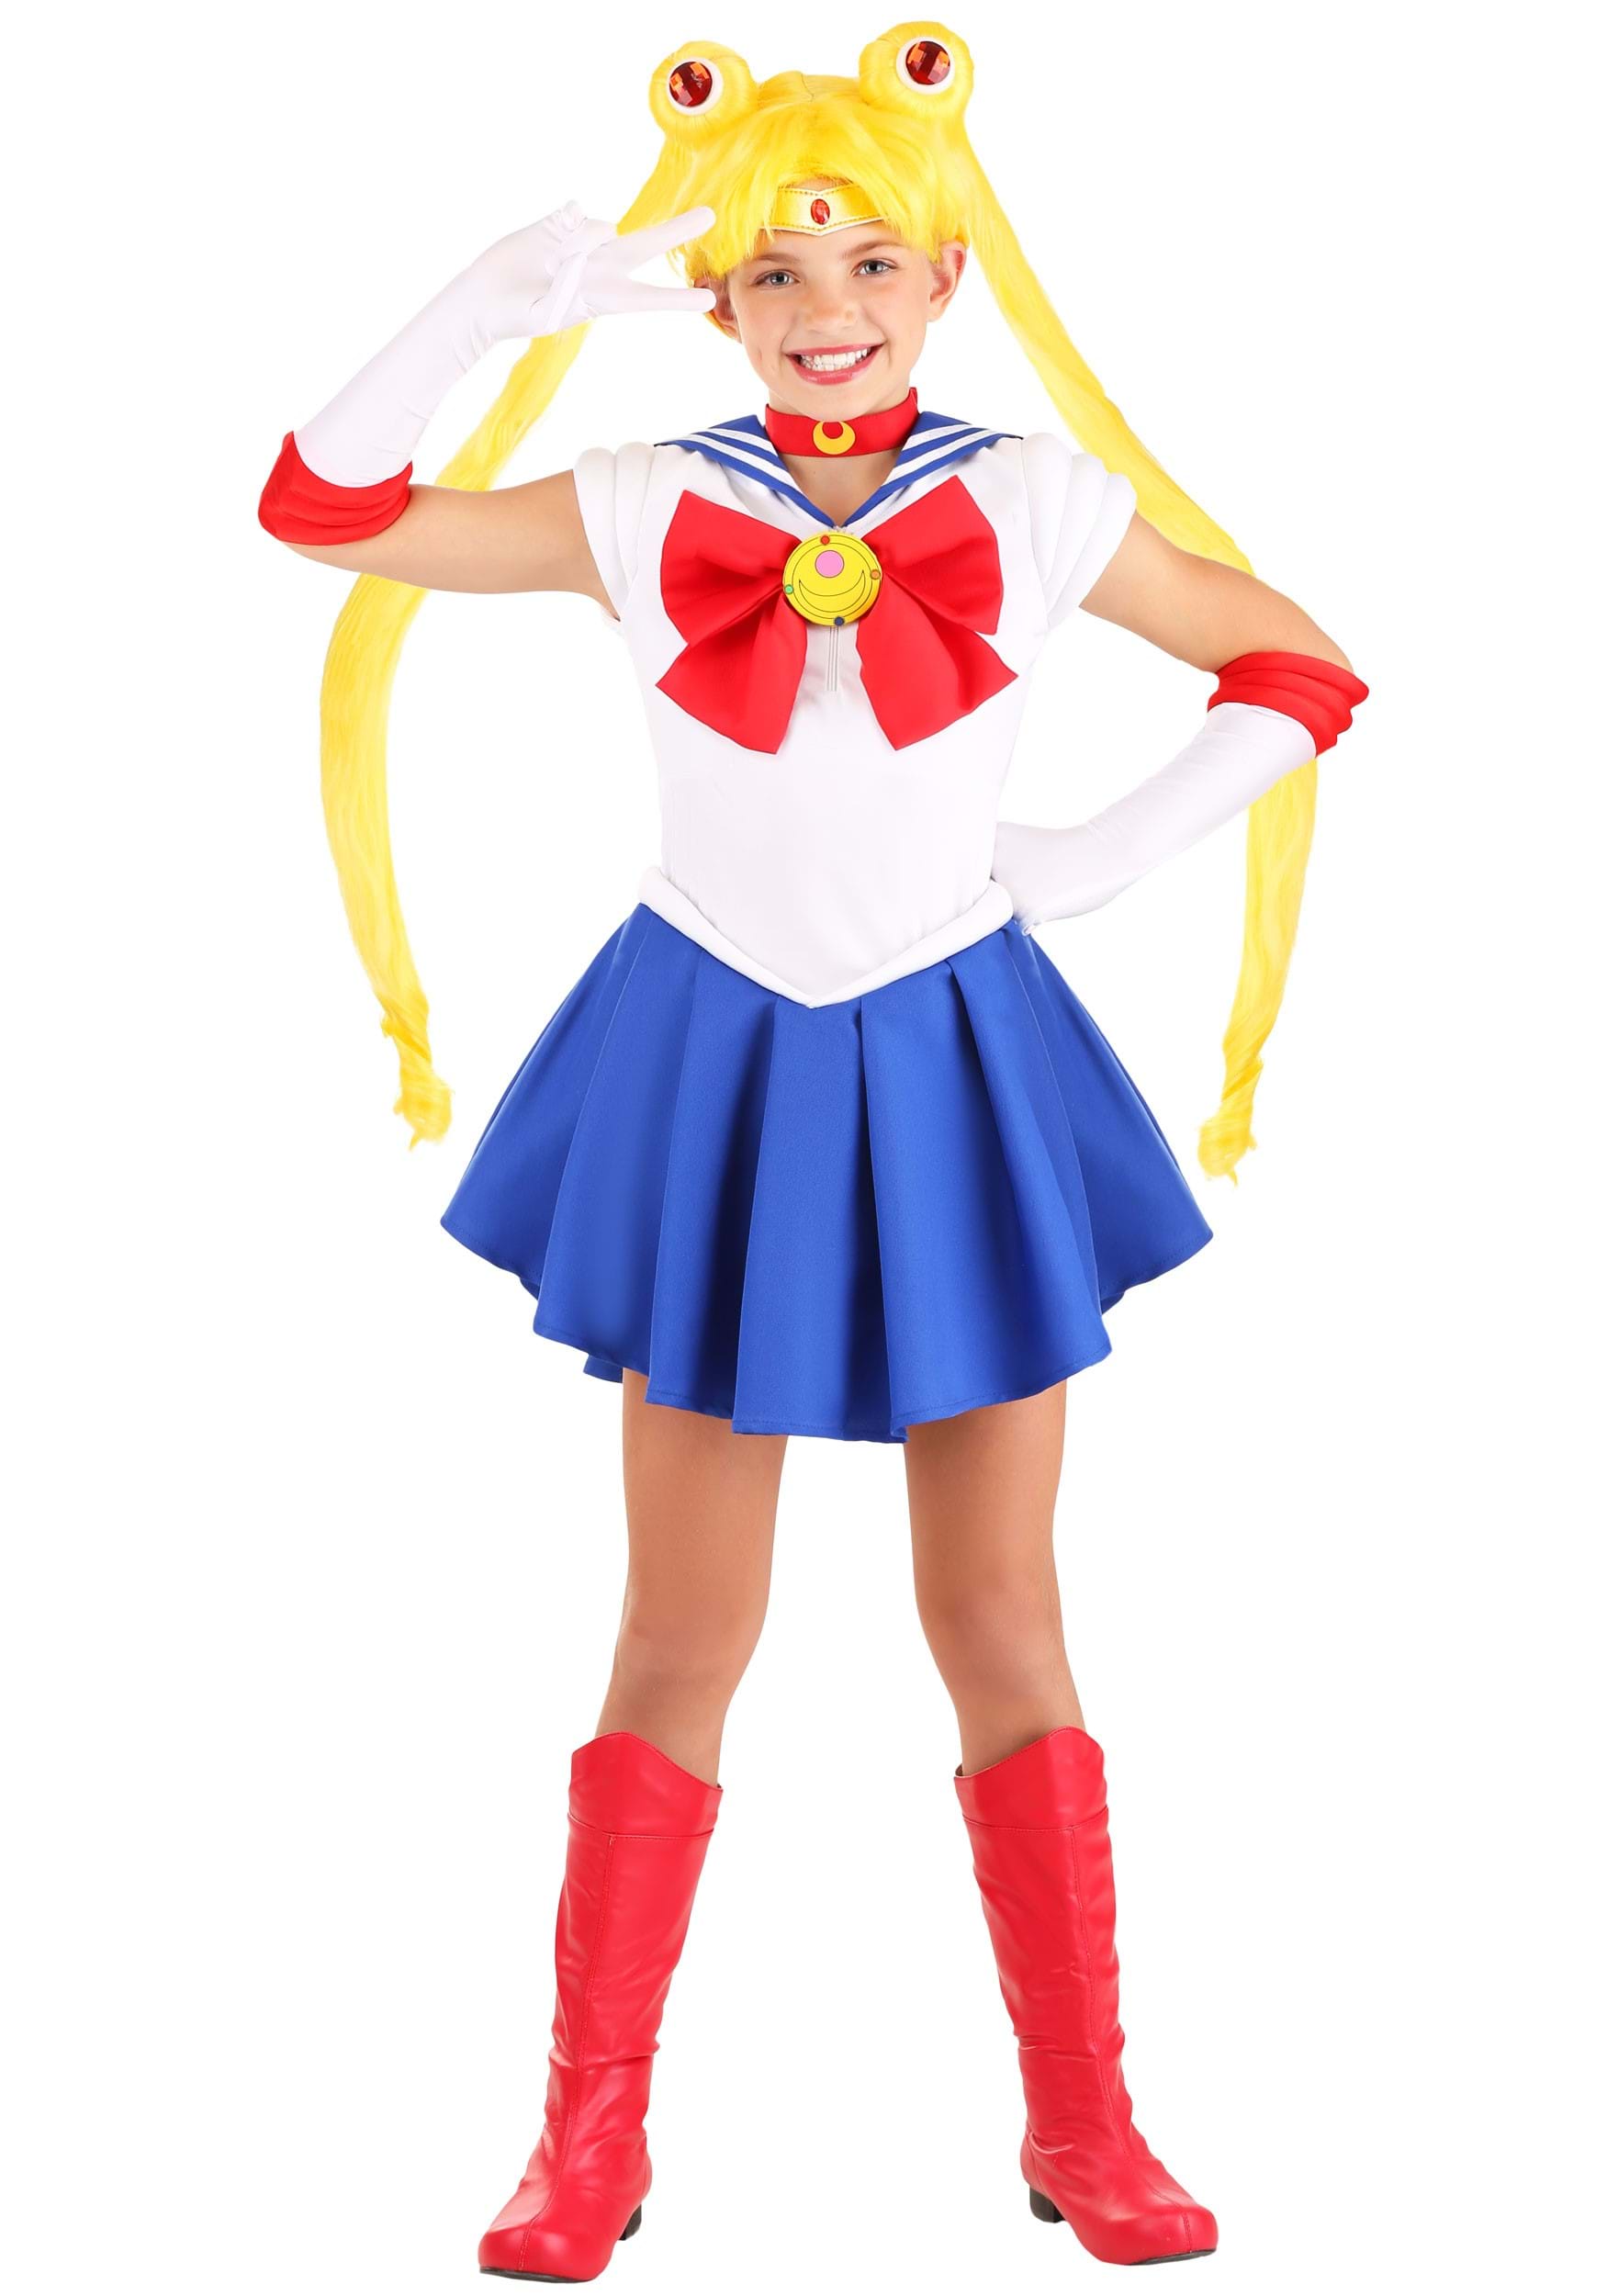 Photos - Fancy Dress MOON FUN Costumes Girl's Sailor  Costume Blue/Red/White FUN6293CH 